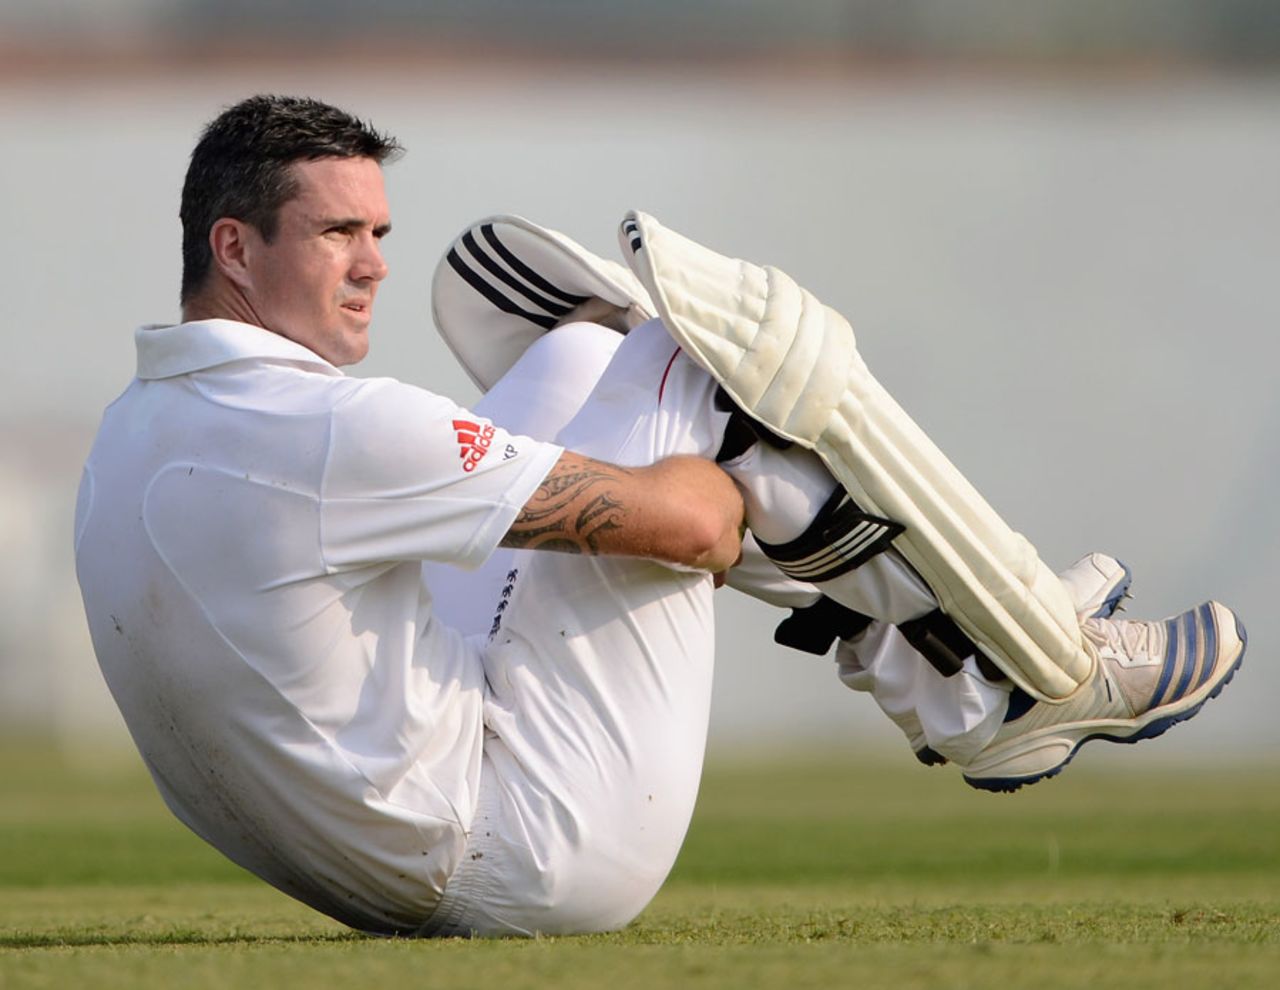 Kevin Pietersen struggled with cramp during his innings, Haryana v England XI, 1st day, Ahmedabad, November 8, 2012